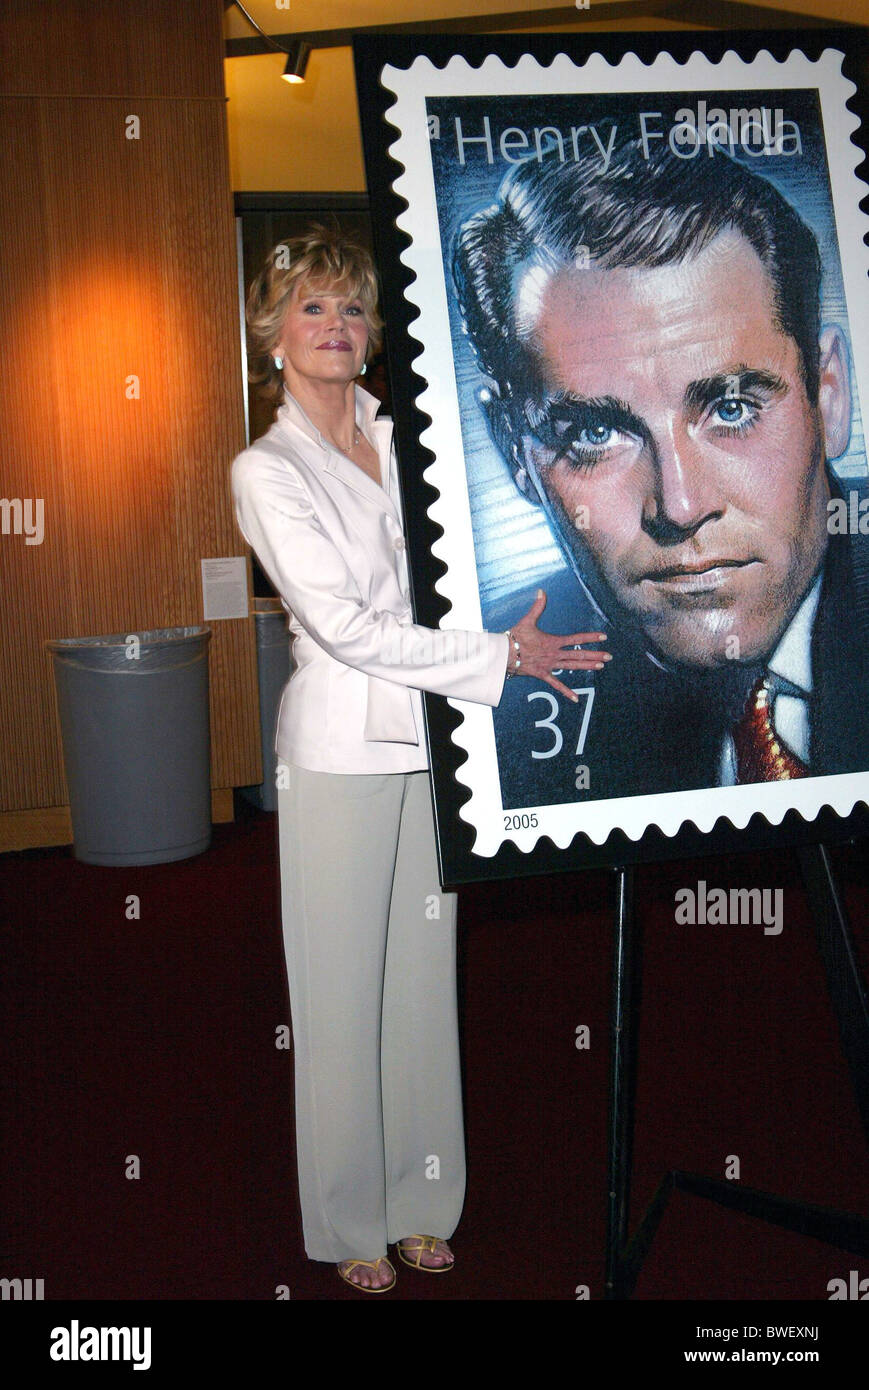 Henry Fonda Commemorative U.S. Postage Stamp Unveiling Stock Photo